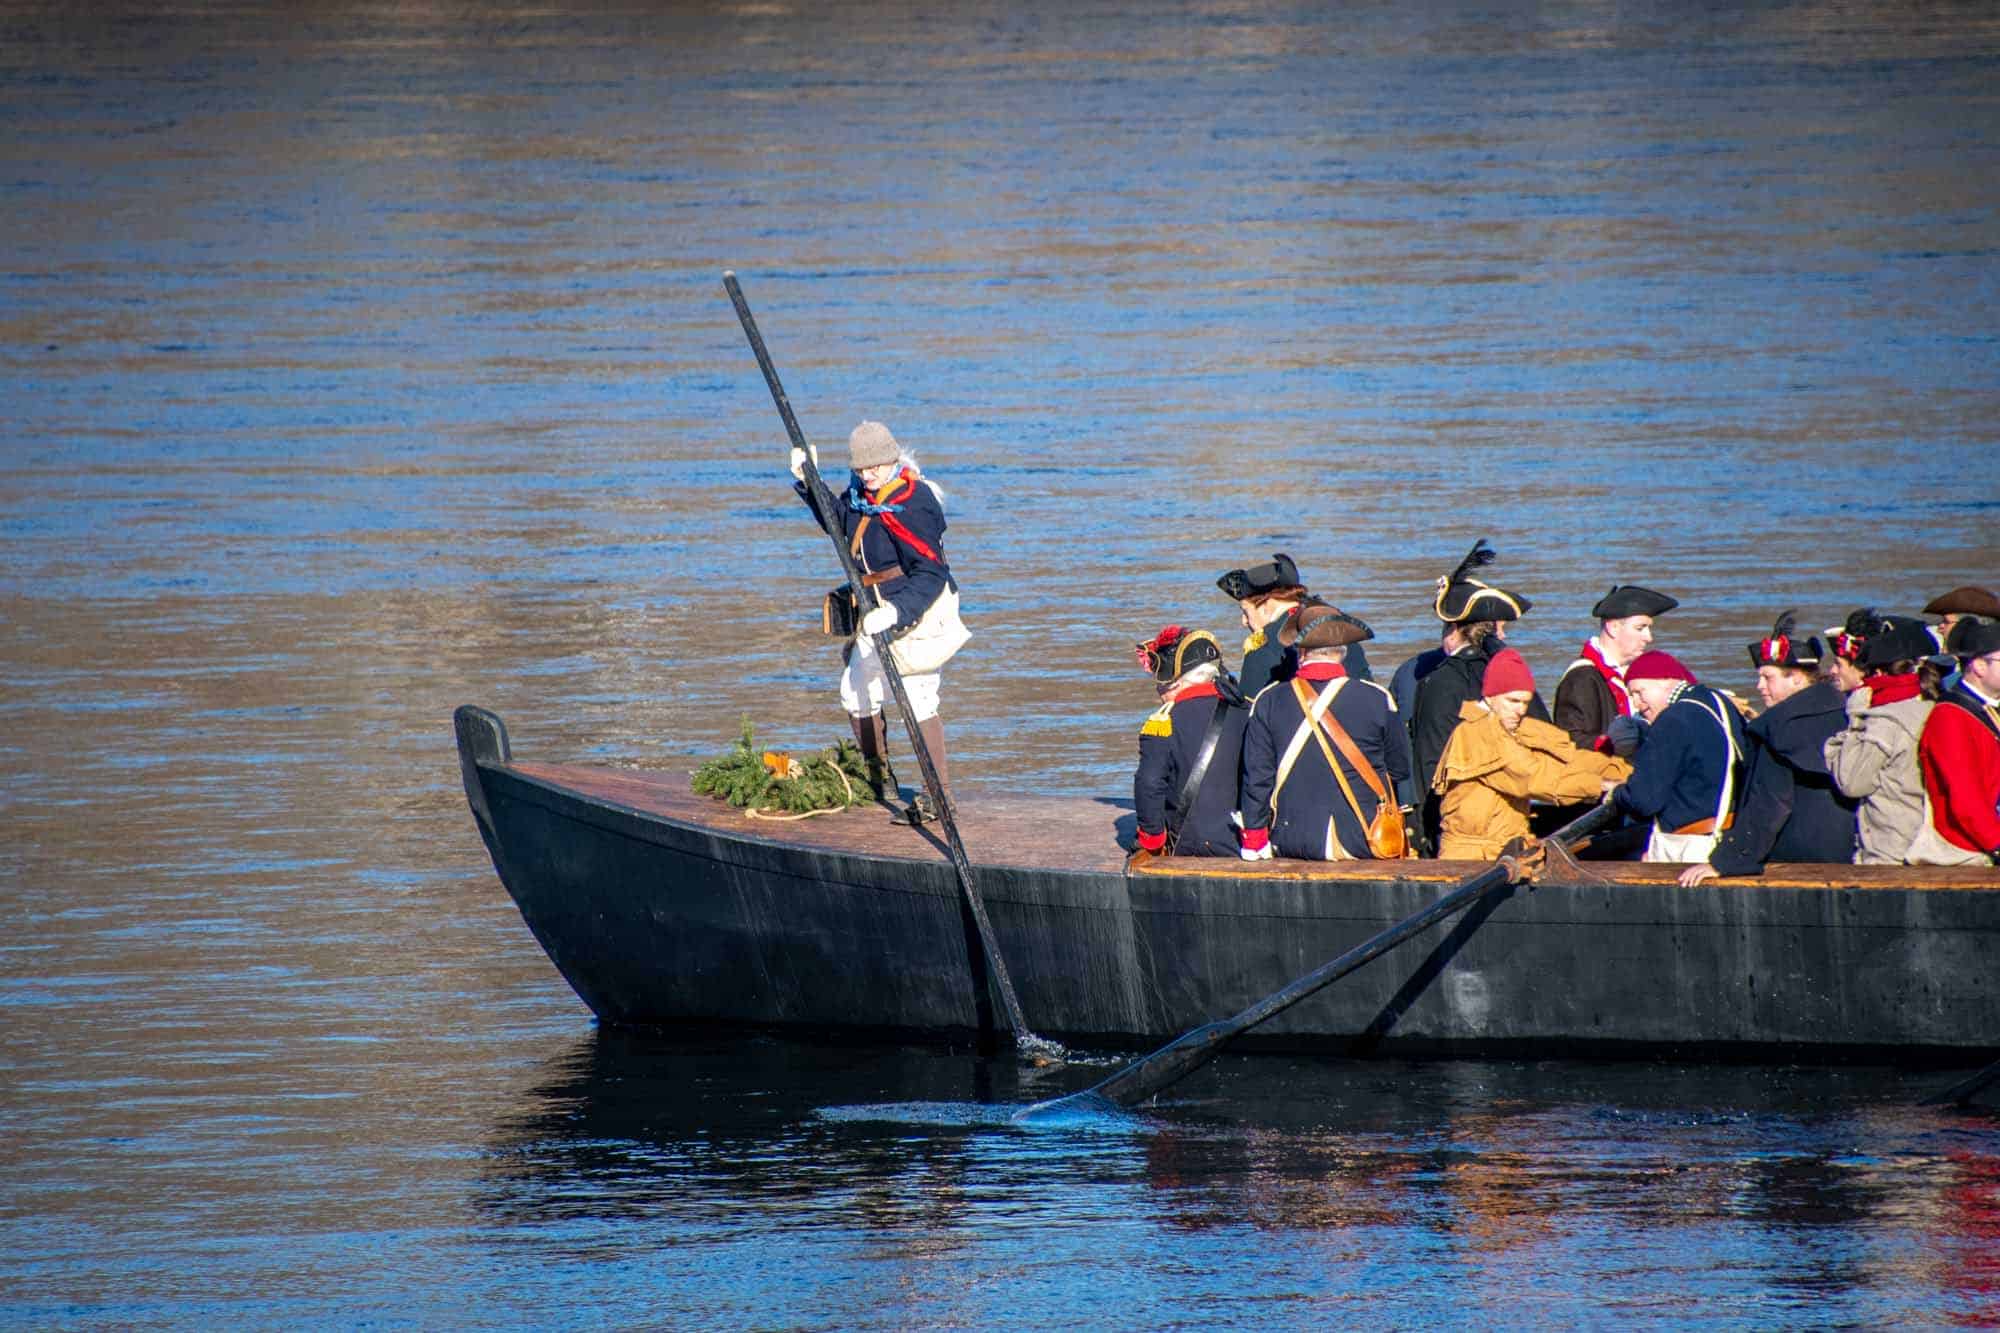 Reenators in Revolutionary-era dress row boats across the Delaware River.